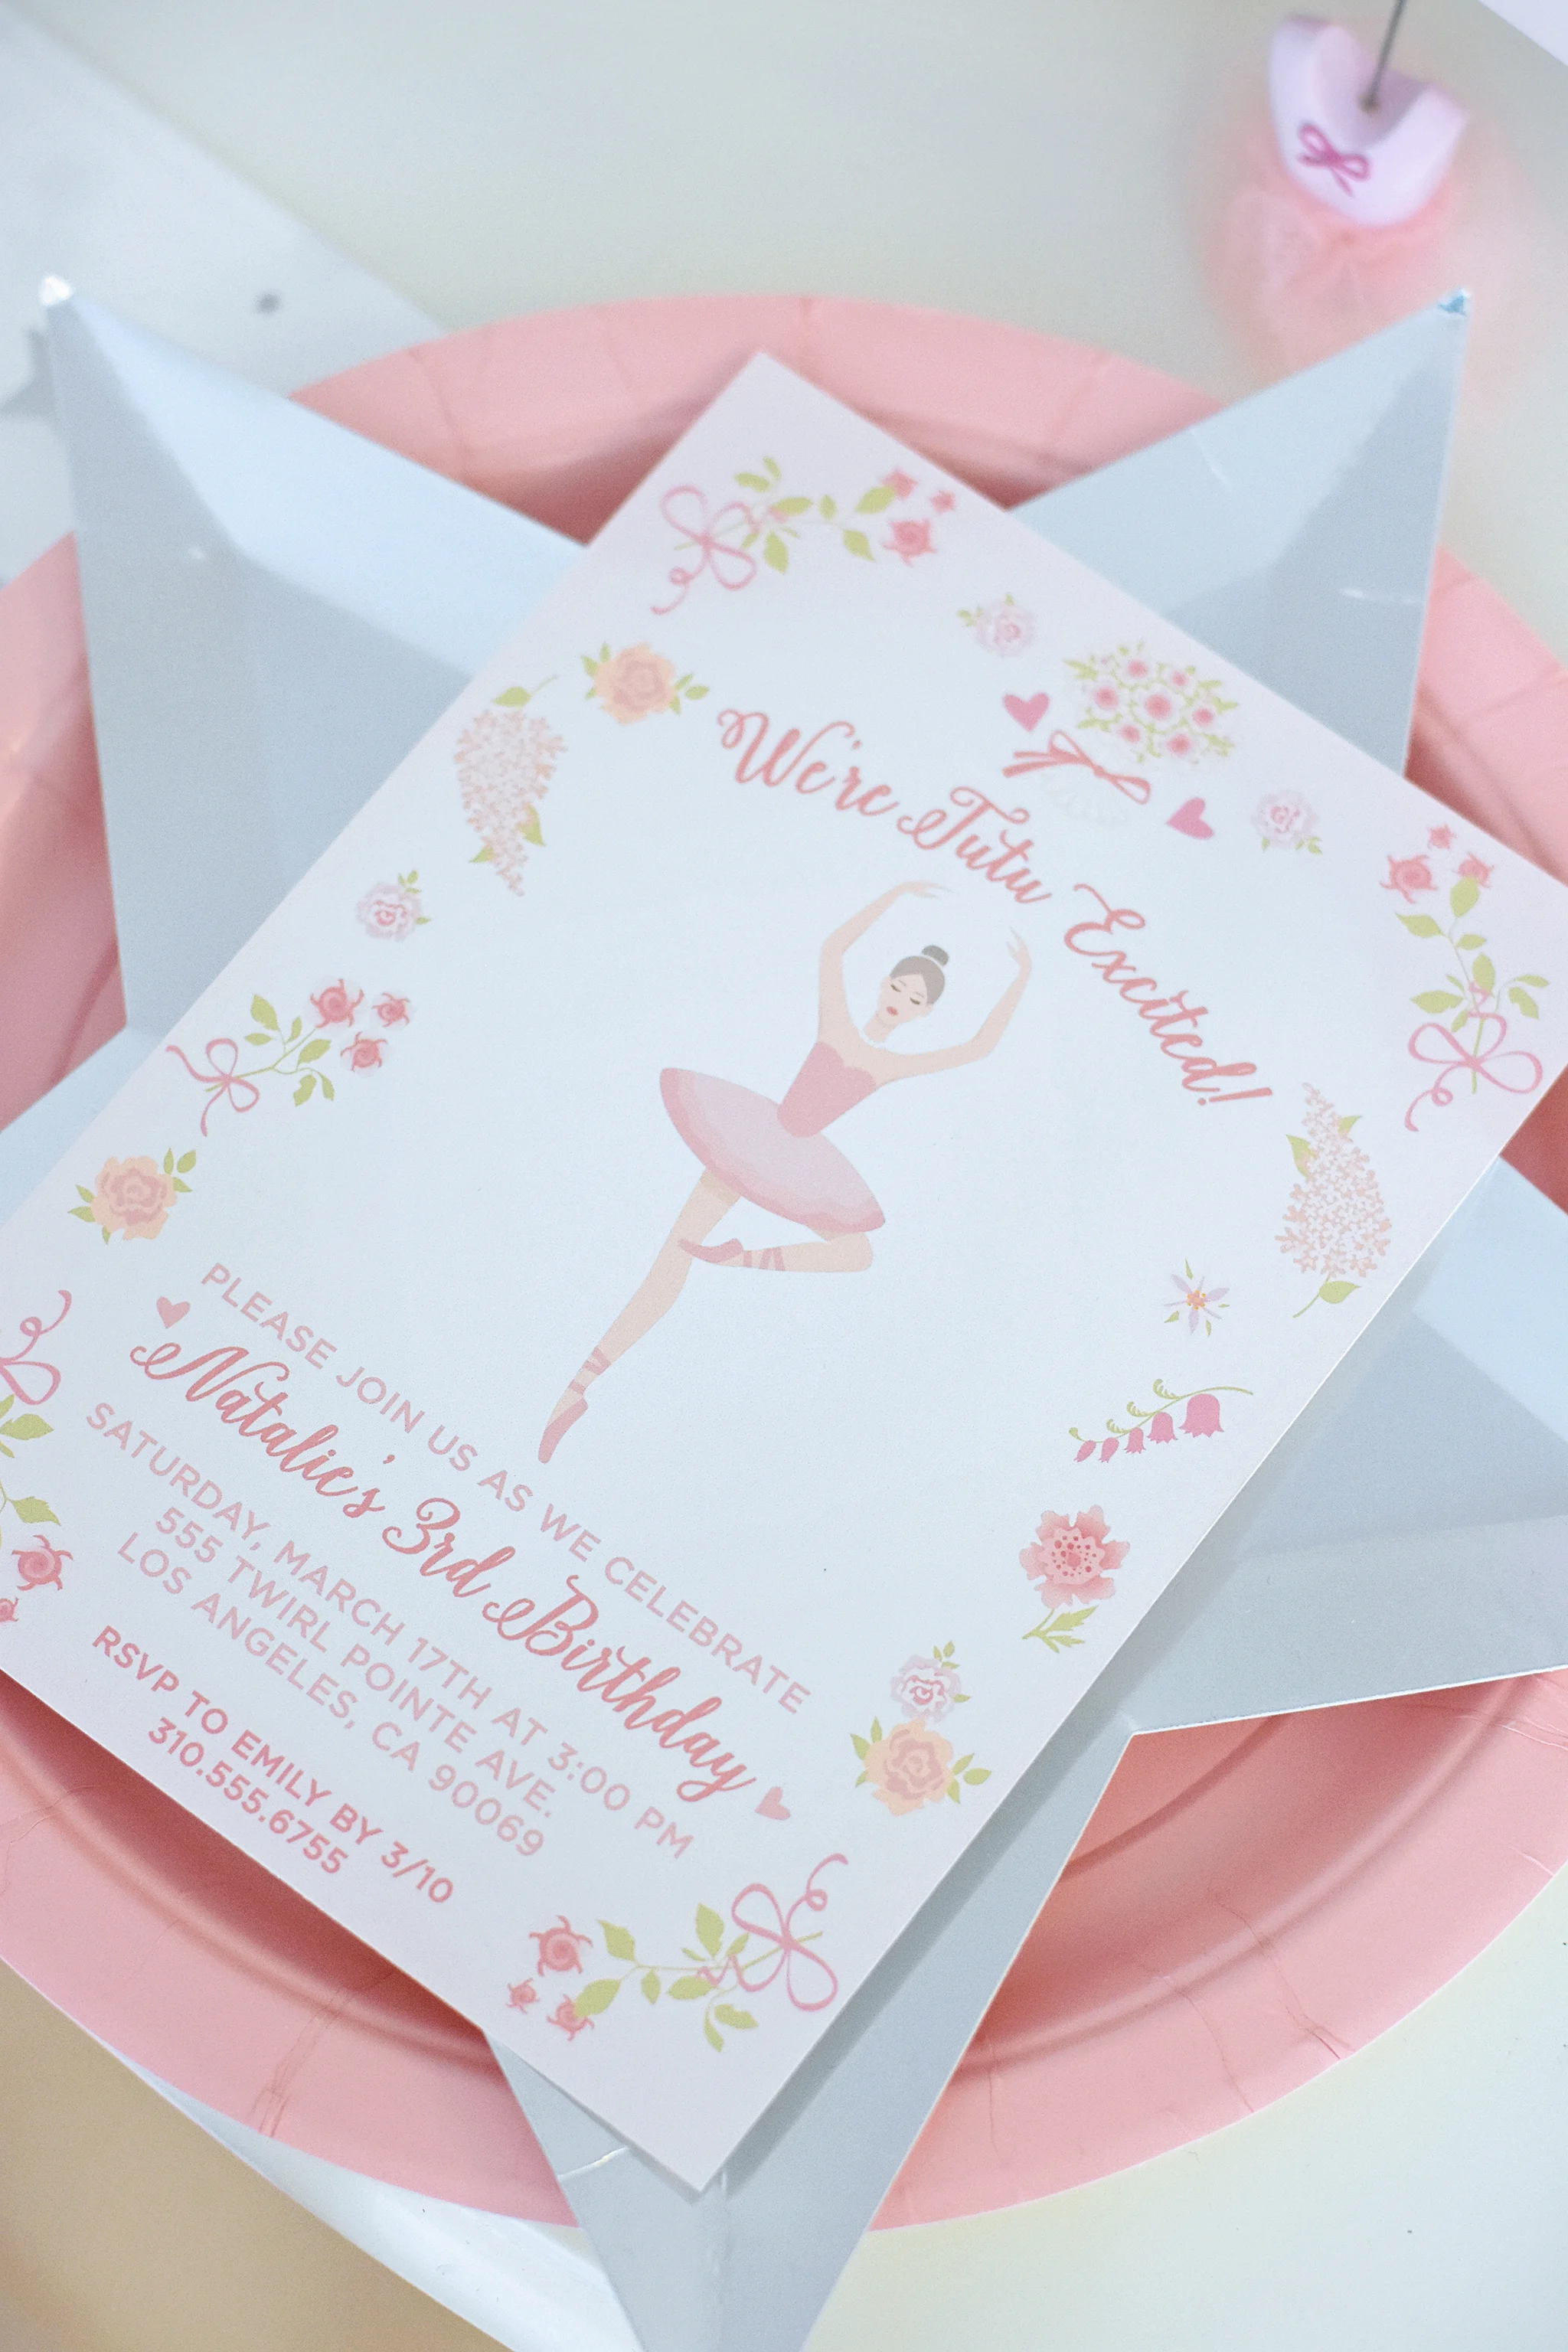 These printable invitations are "Tutu" cute!